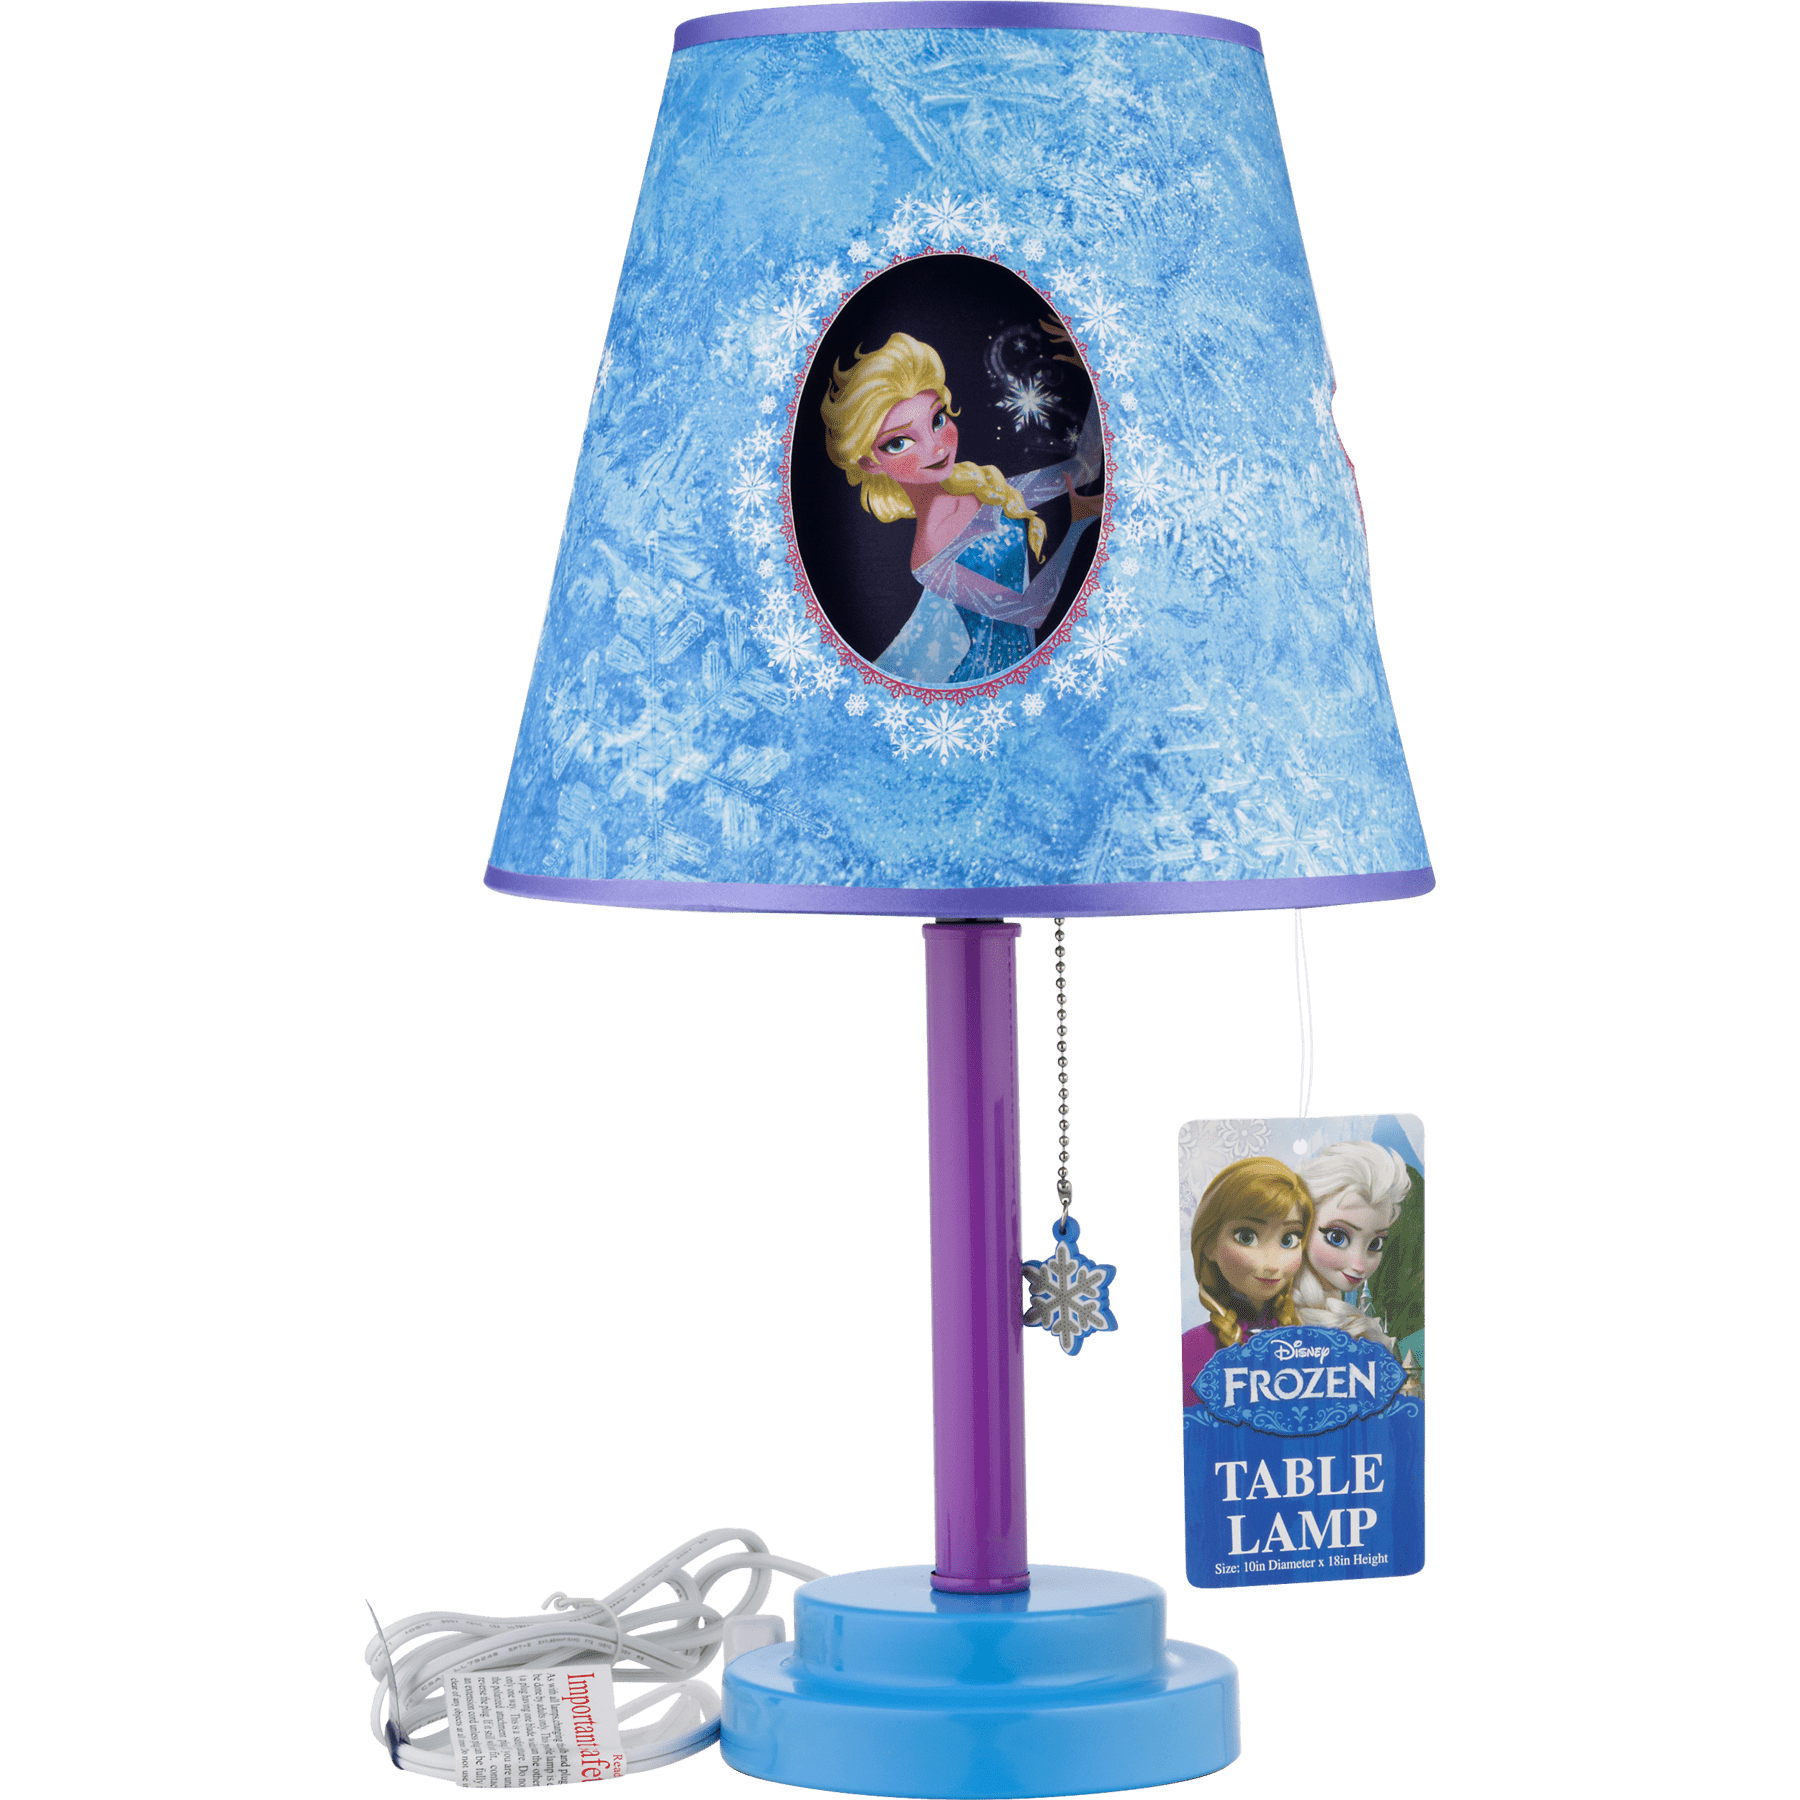 Disney Frozen Table Lamp 1 0 Ct, Disney Table Lamps